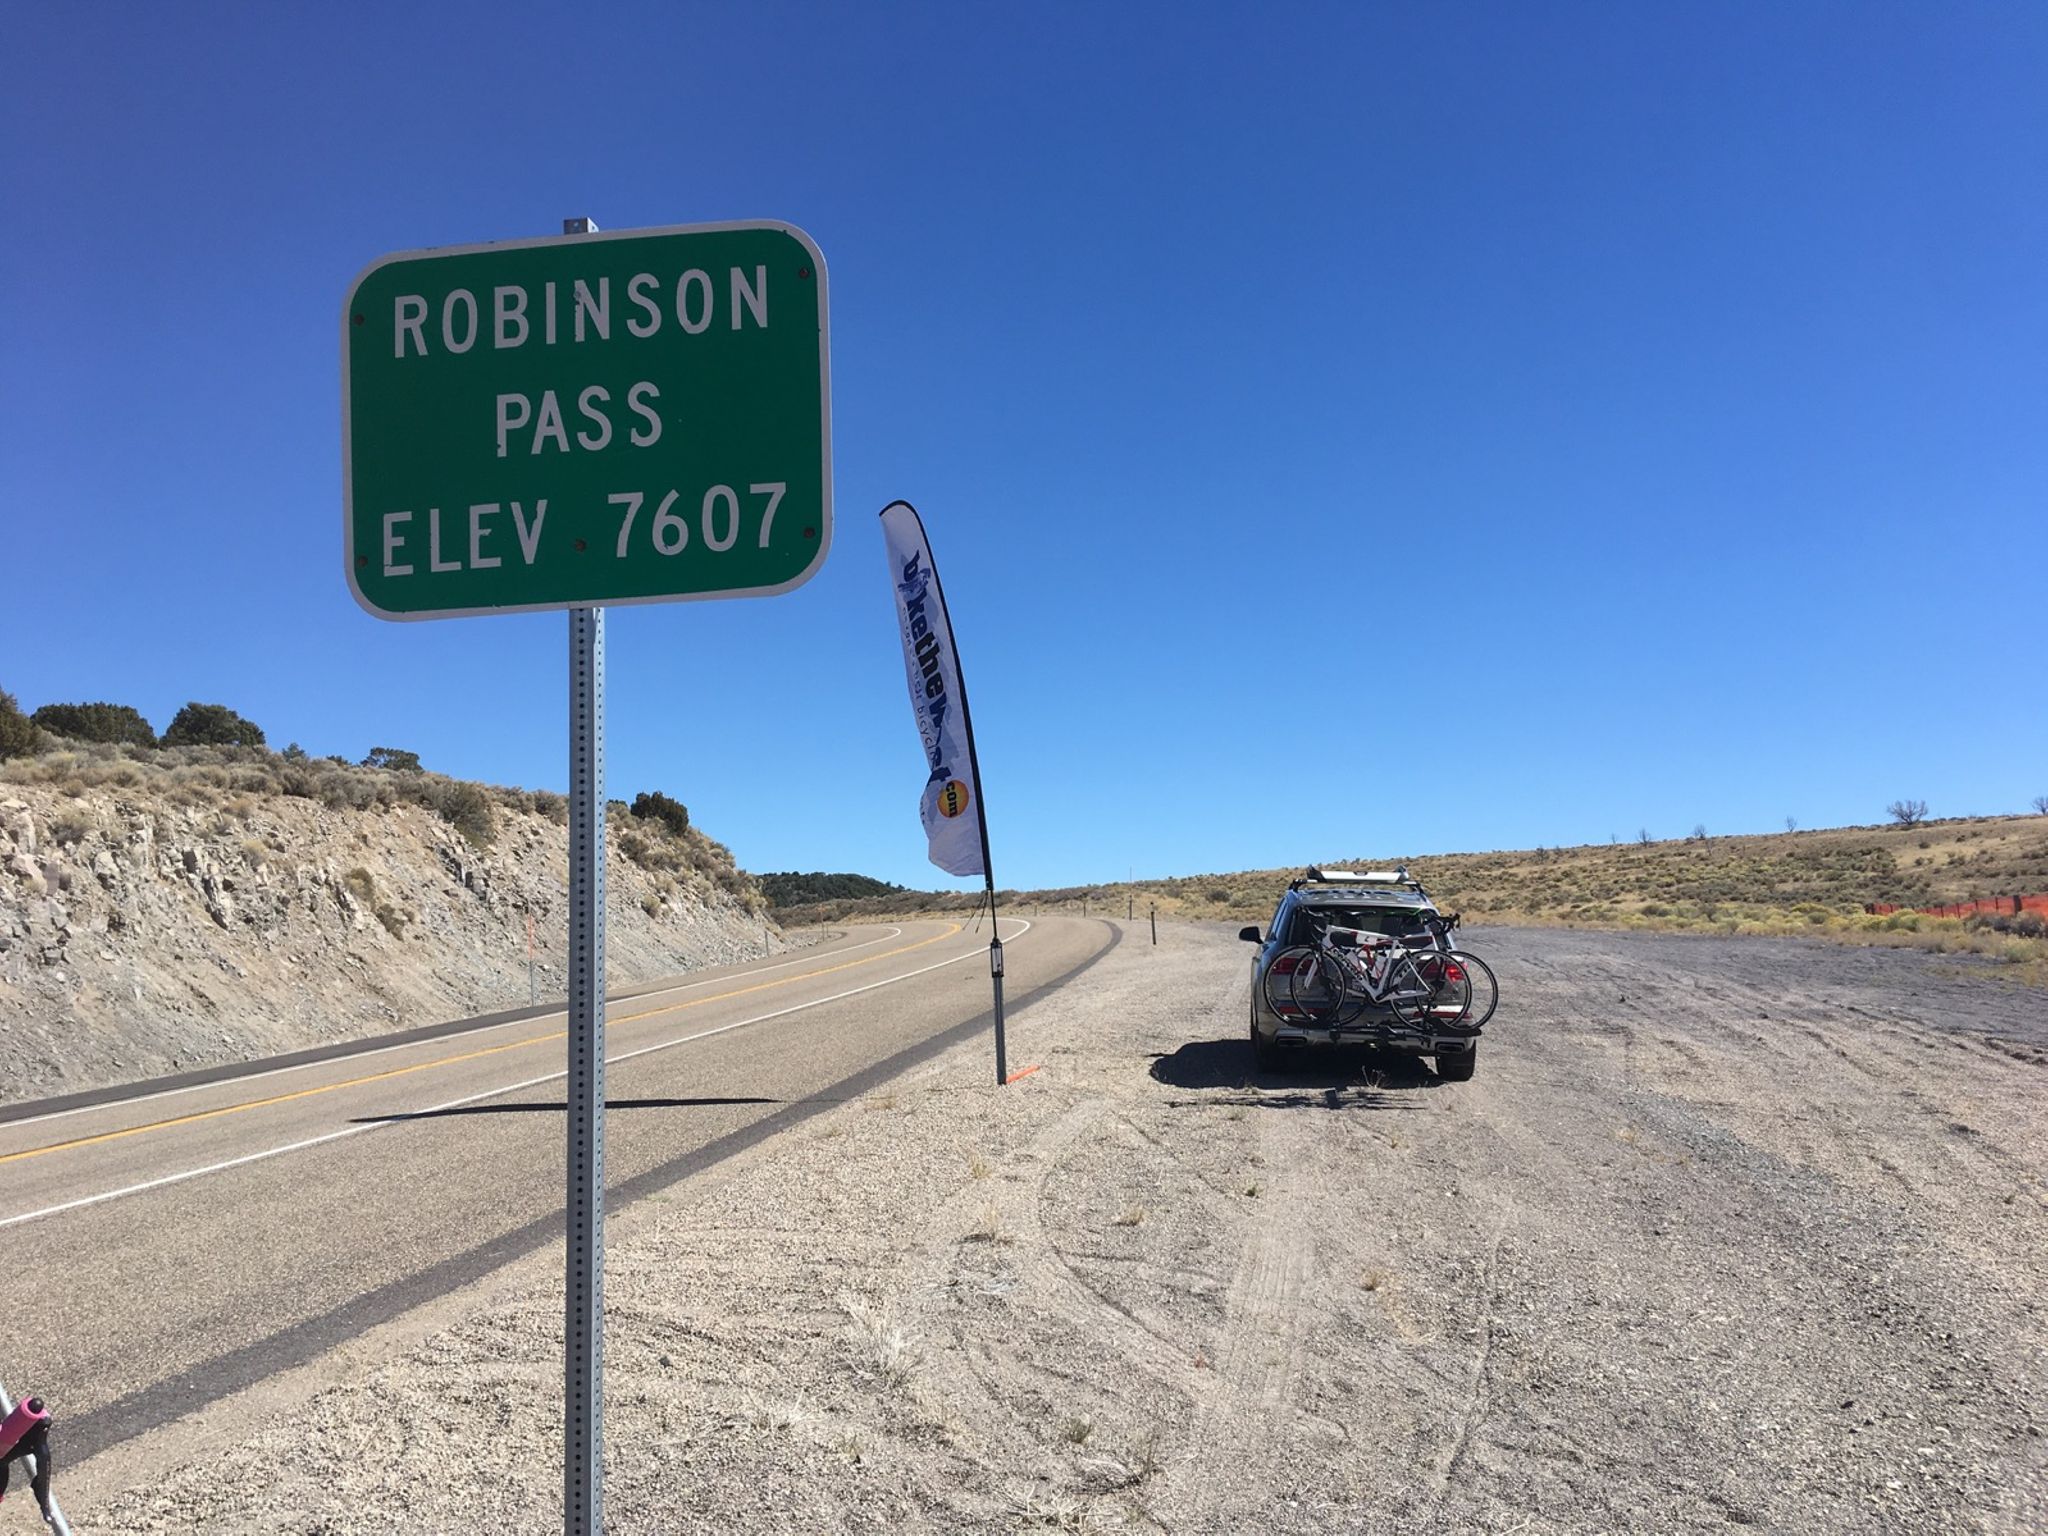 A drive through the Robinson Pass